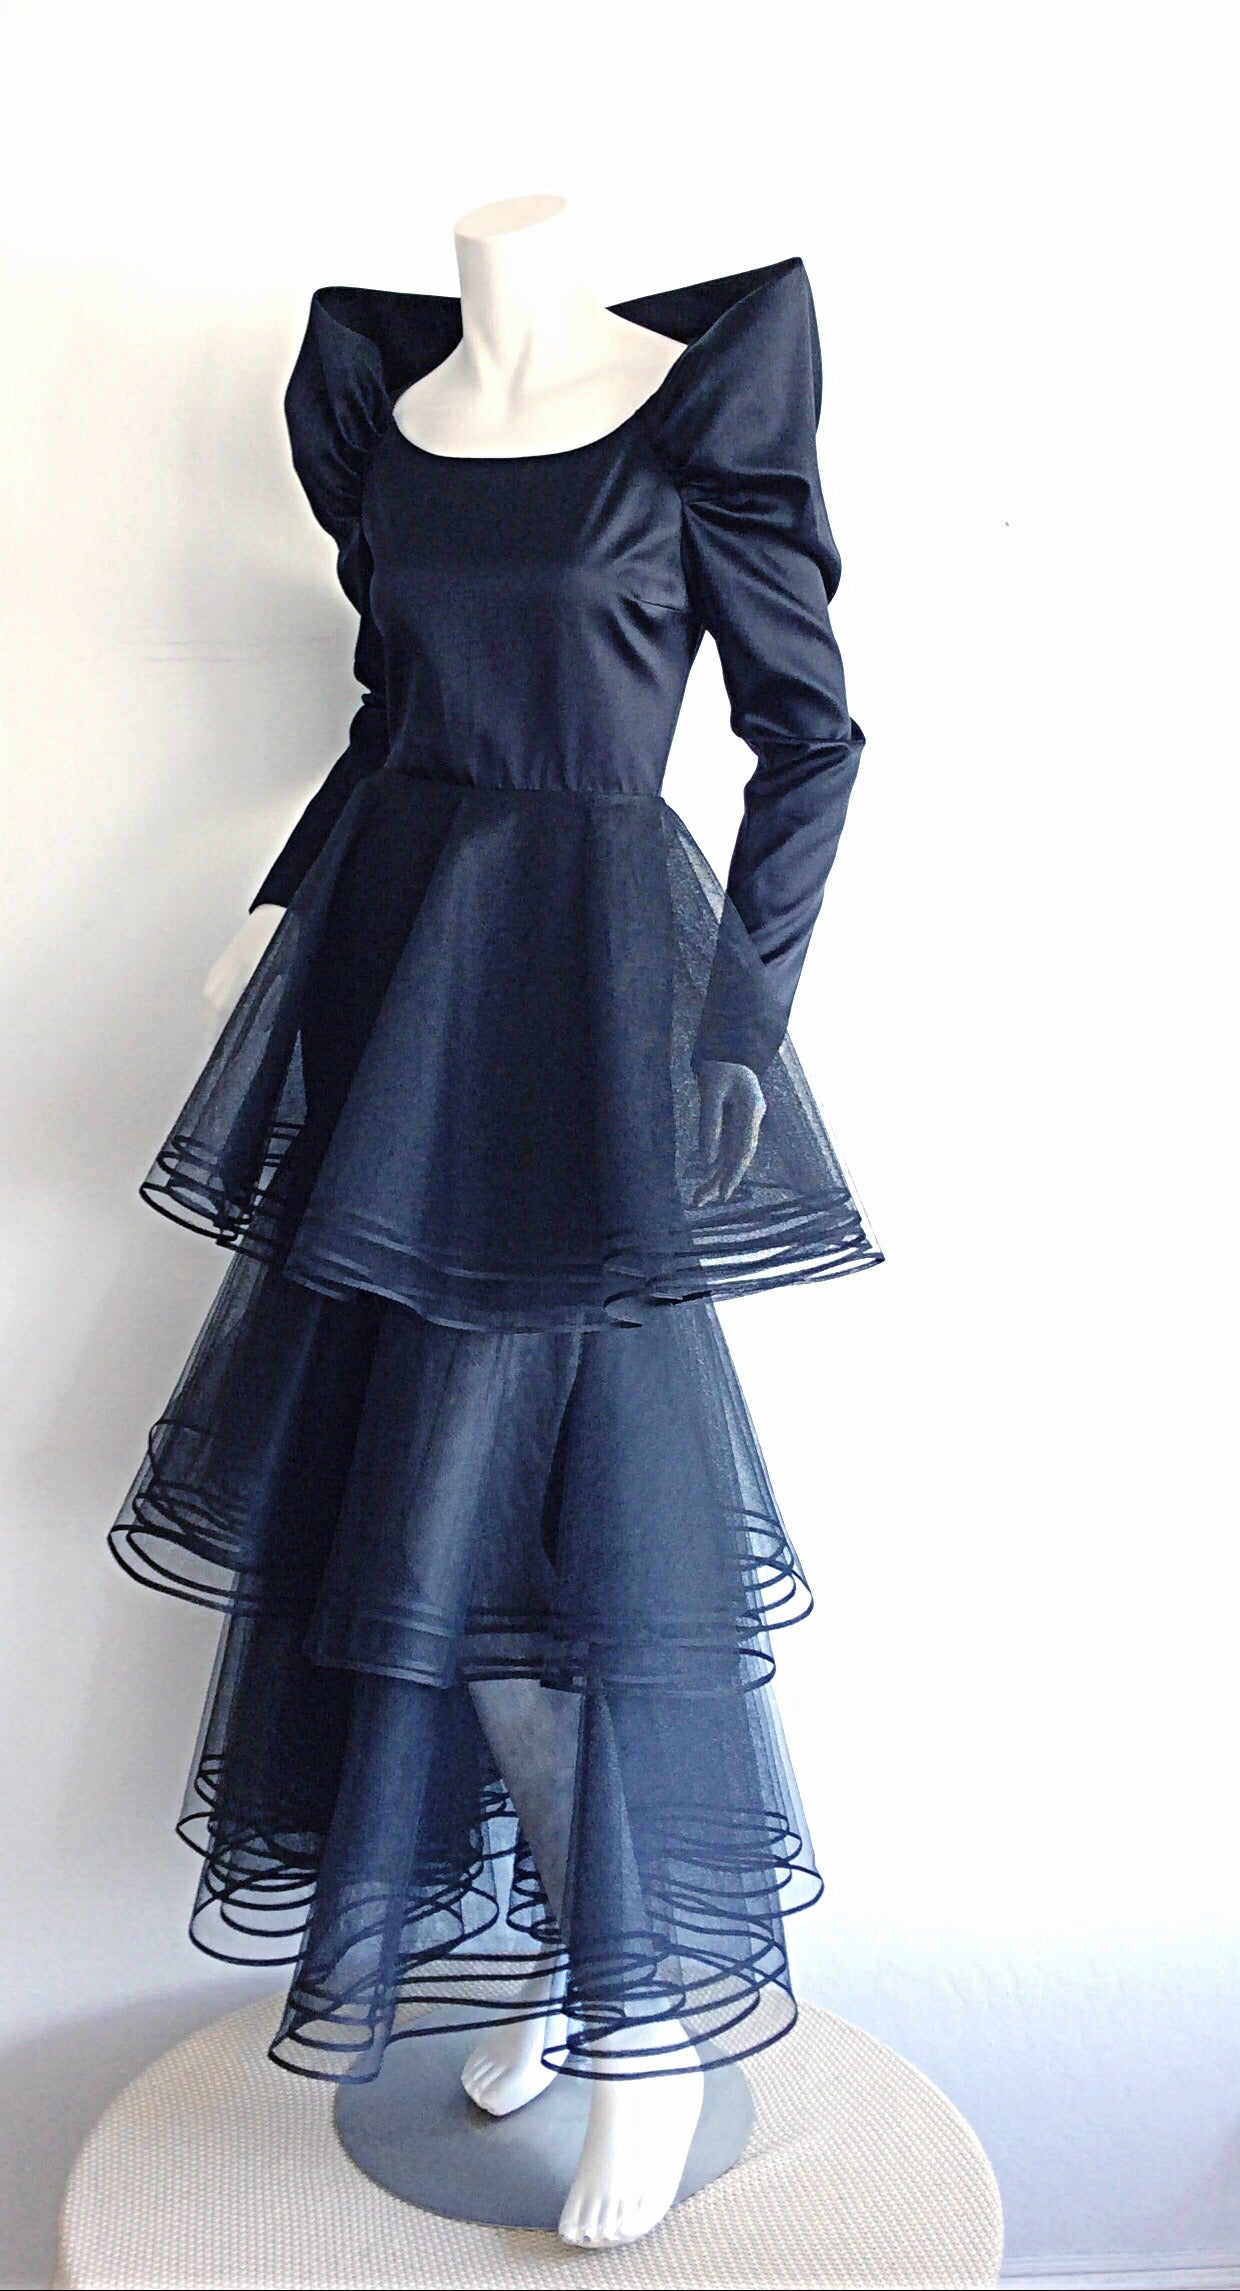 Incredible Vintage Nina Ricci Couture Edwardian Styled Black Crinoline Dress 2